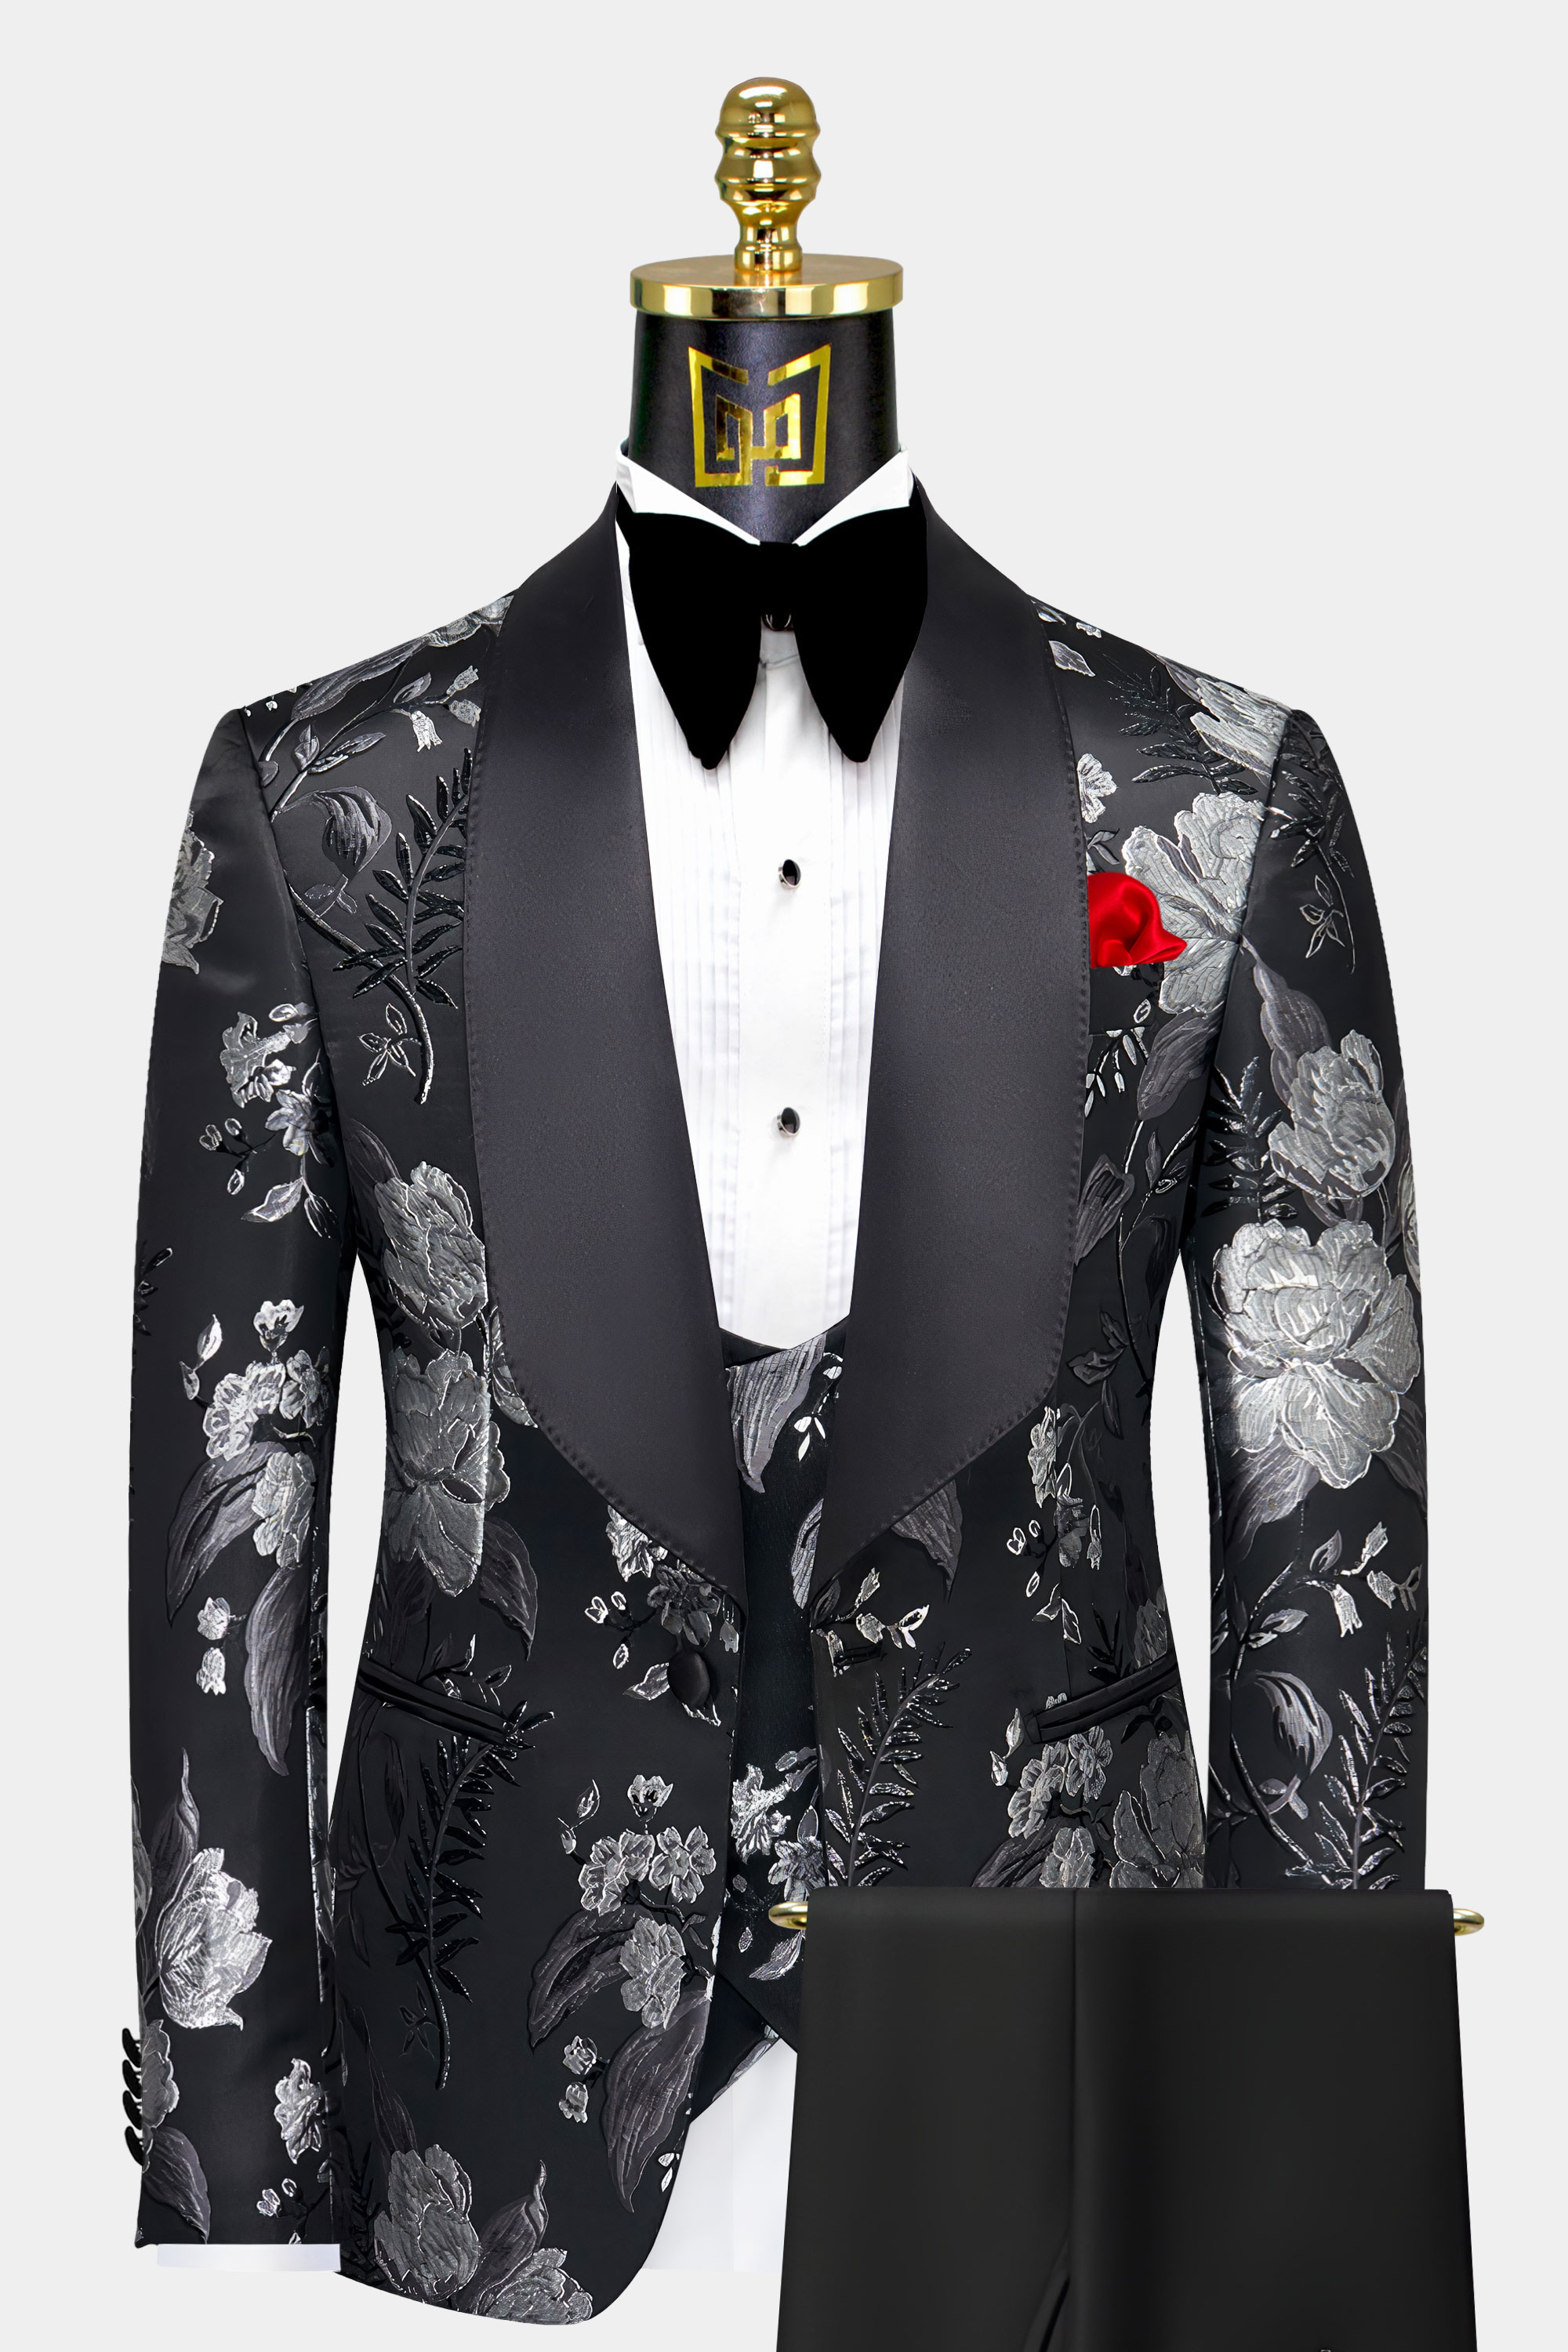 Silver and Black Tuxedo- 3 Piece | Gentleman's Guru